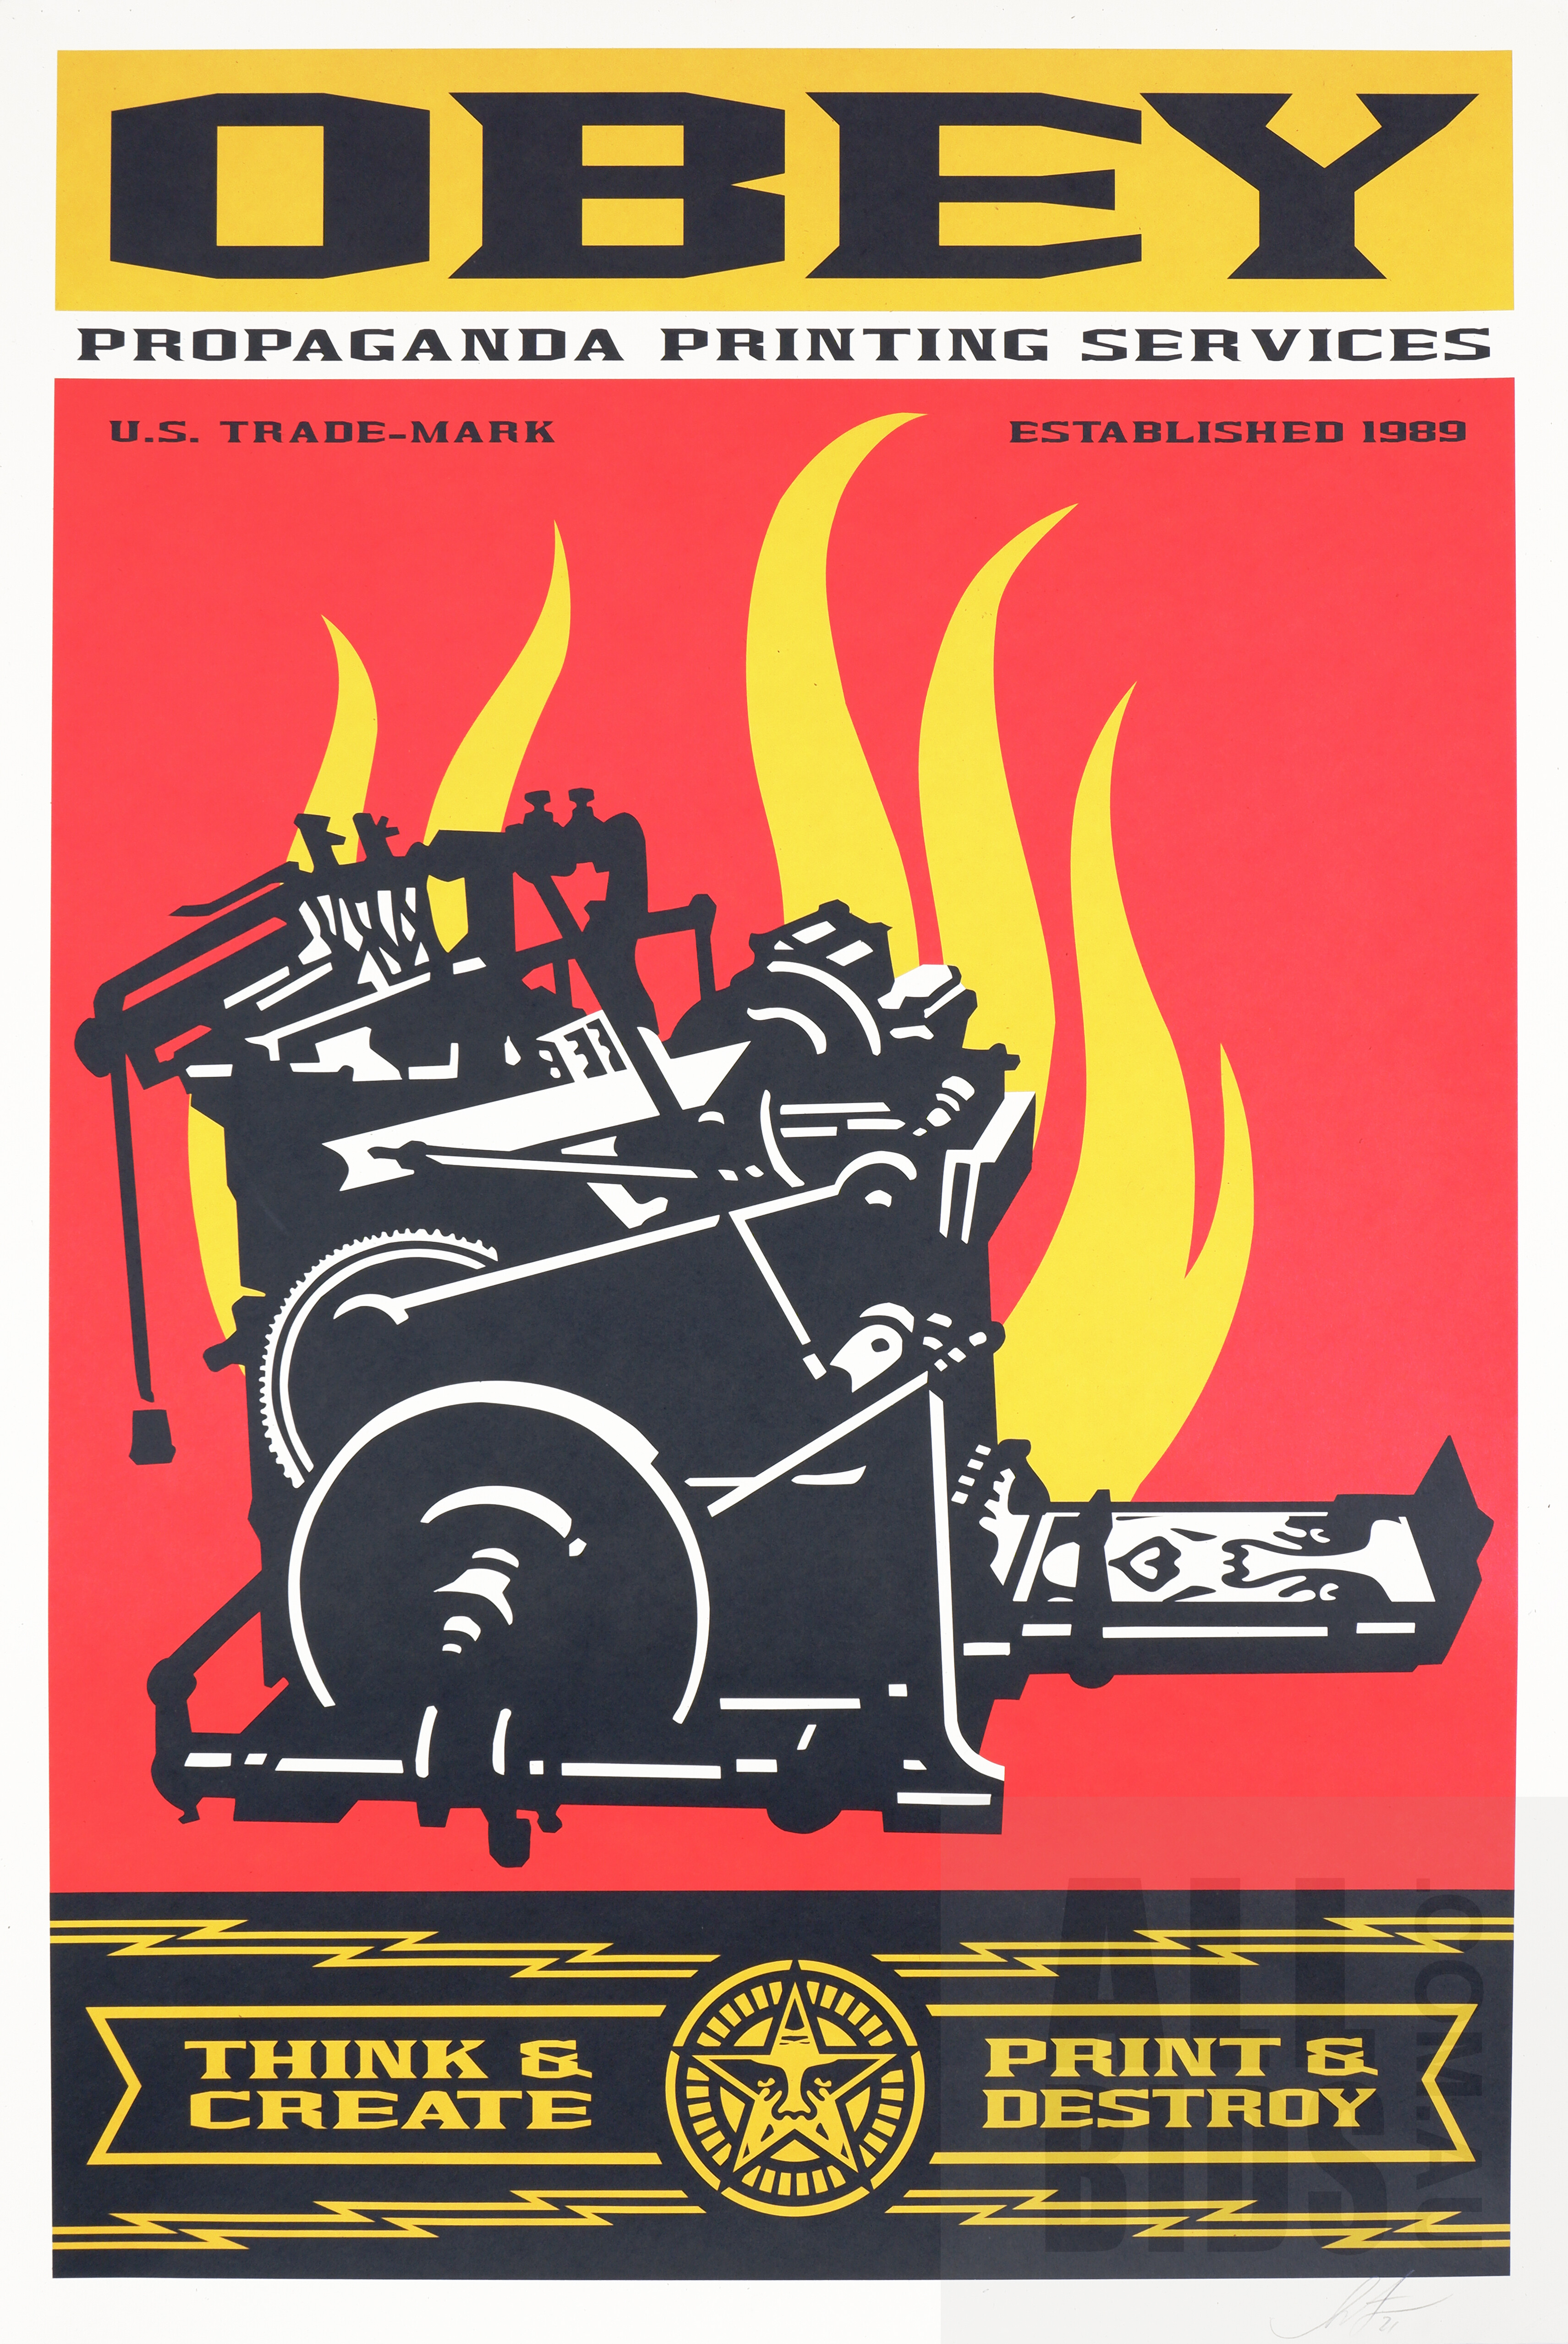 'Shepard Fairey (born 1970, American), Obey - Propaganda Printing Services, Archival Ink Print, 86 x 56 cm (image size)'